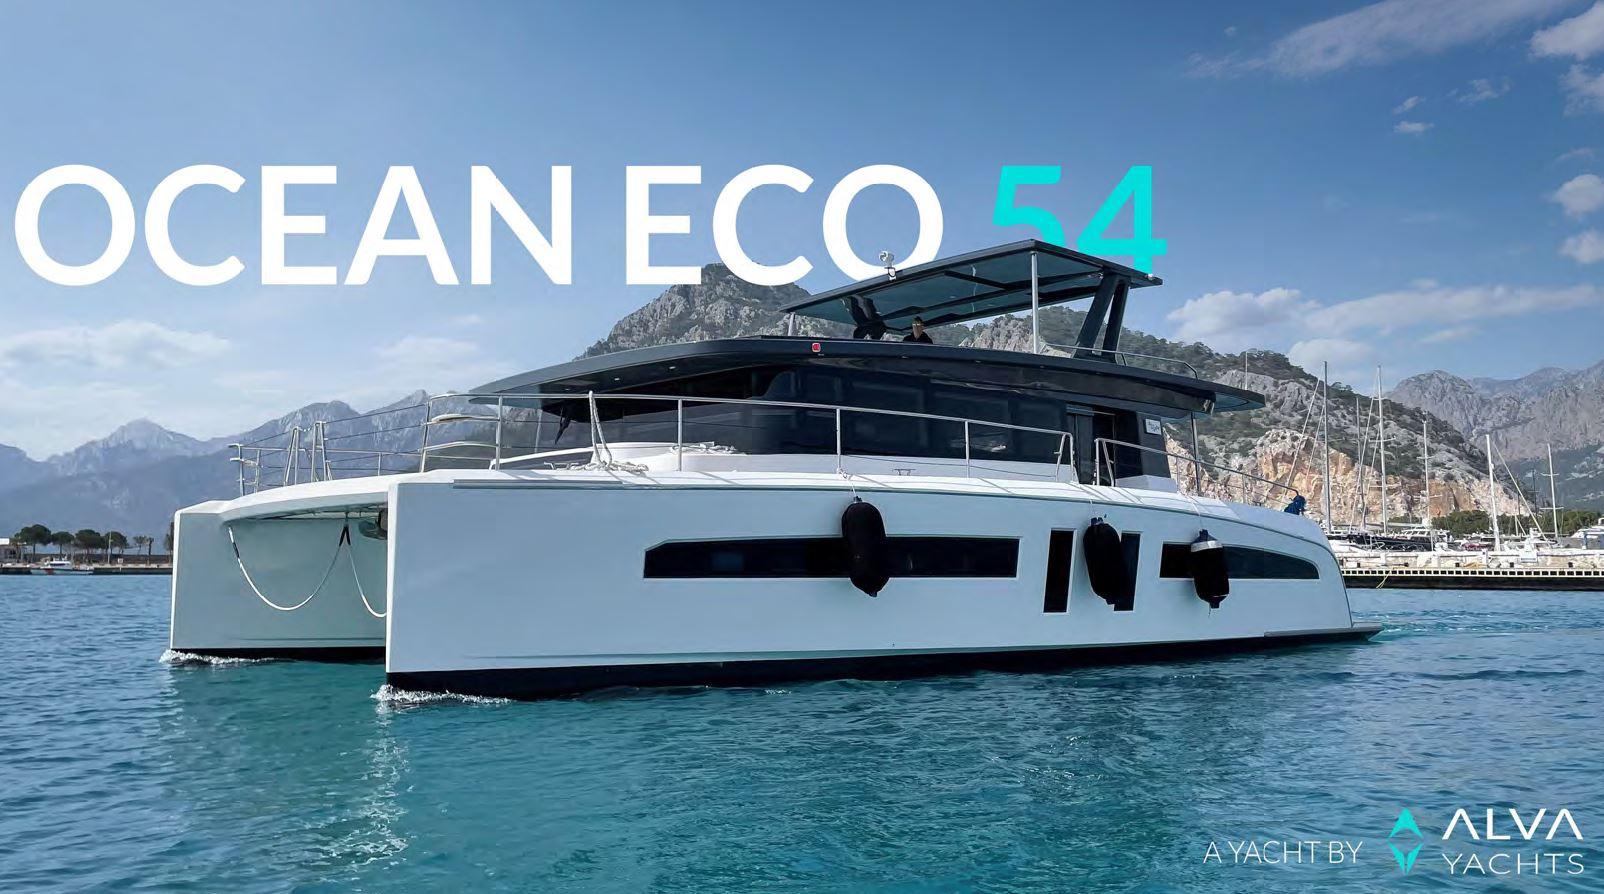 2023 Alva Yachts Ocean Eco 54